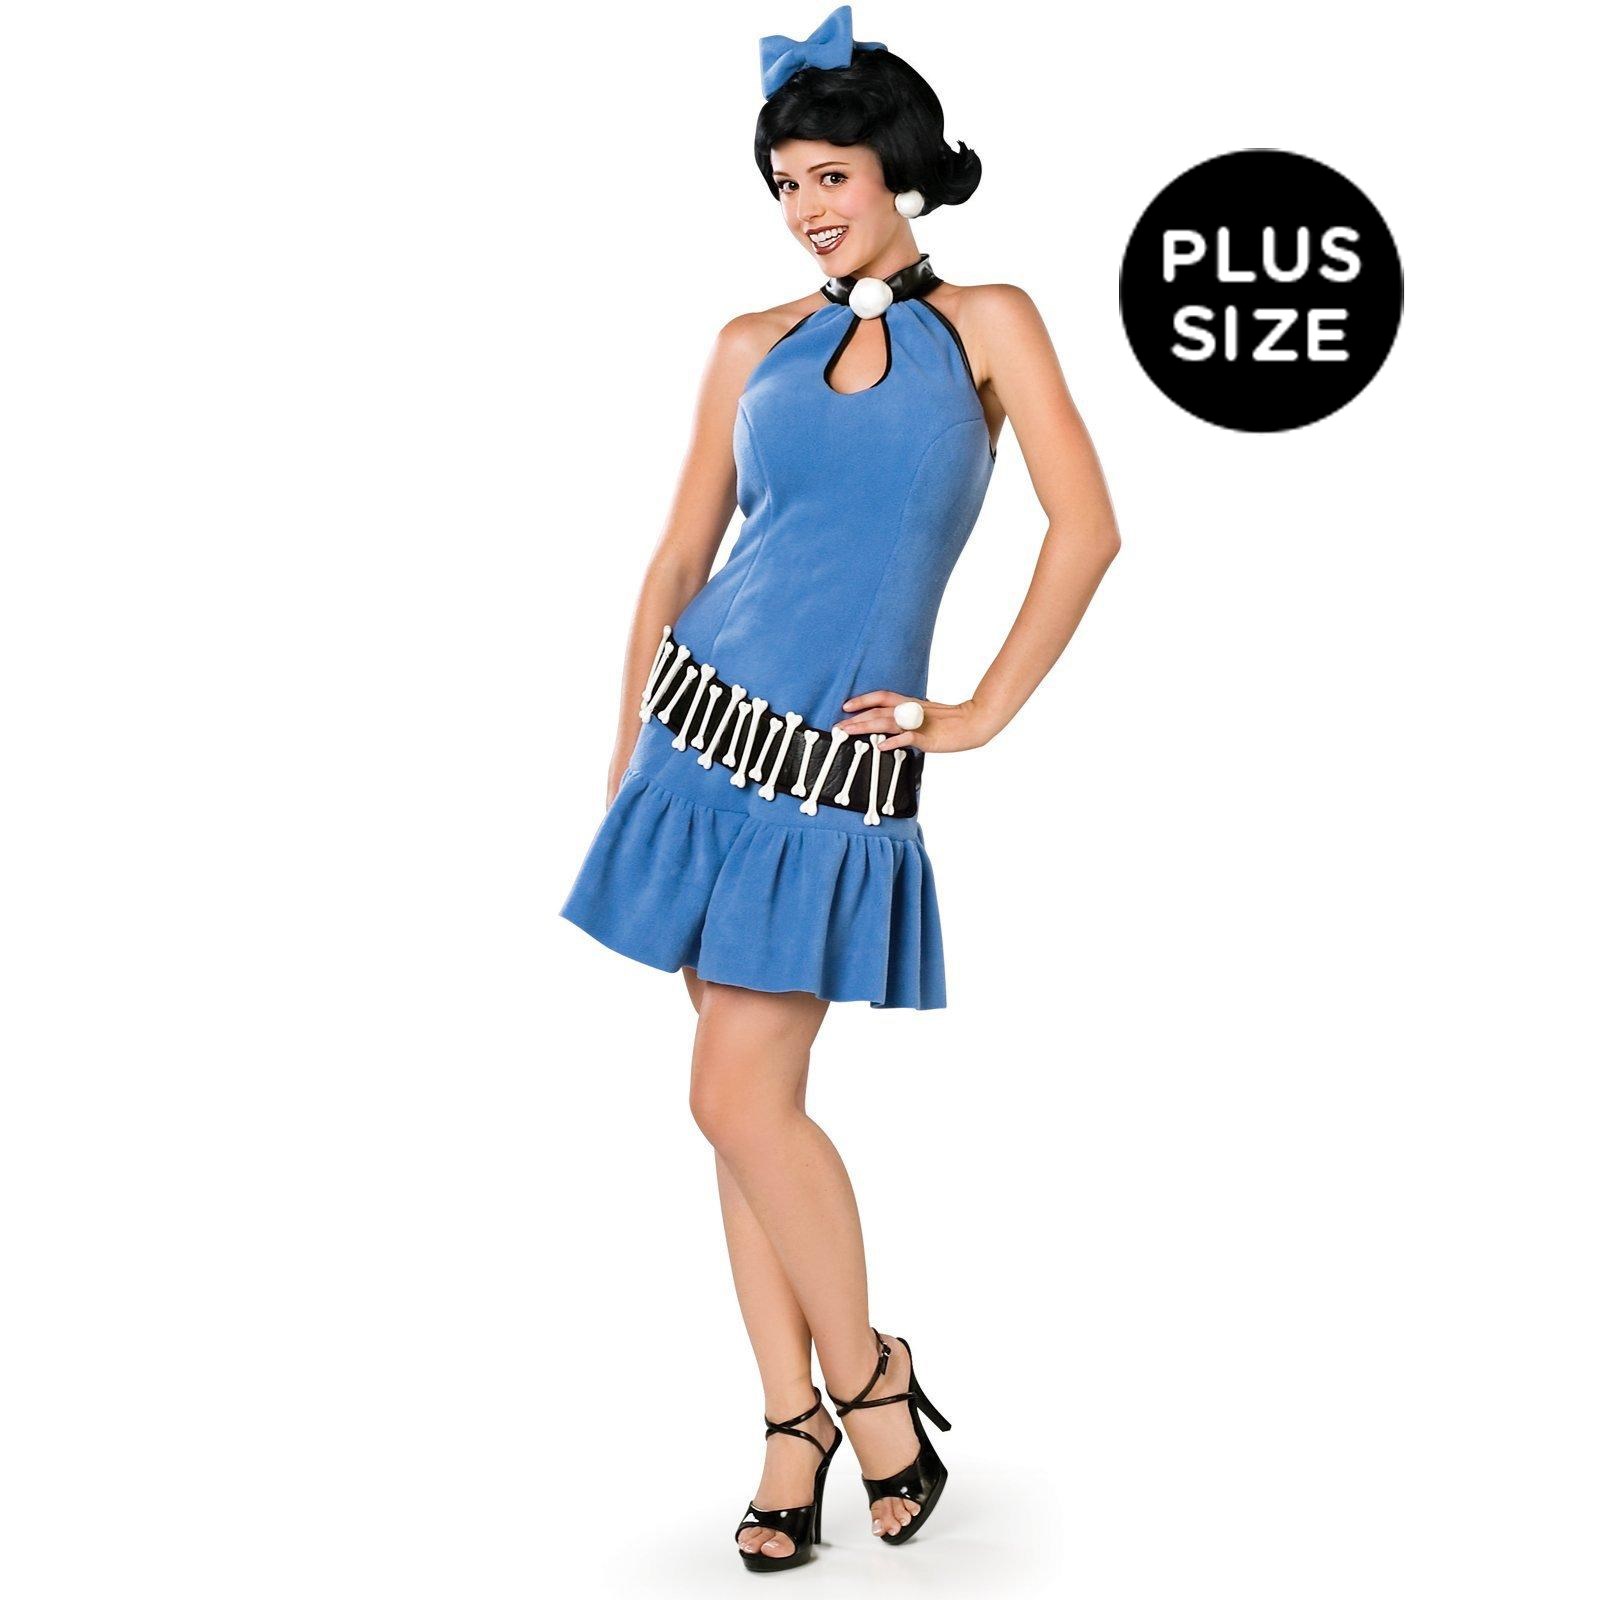 The Flintstones Betty Adult Plus Costume